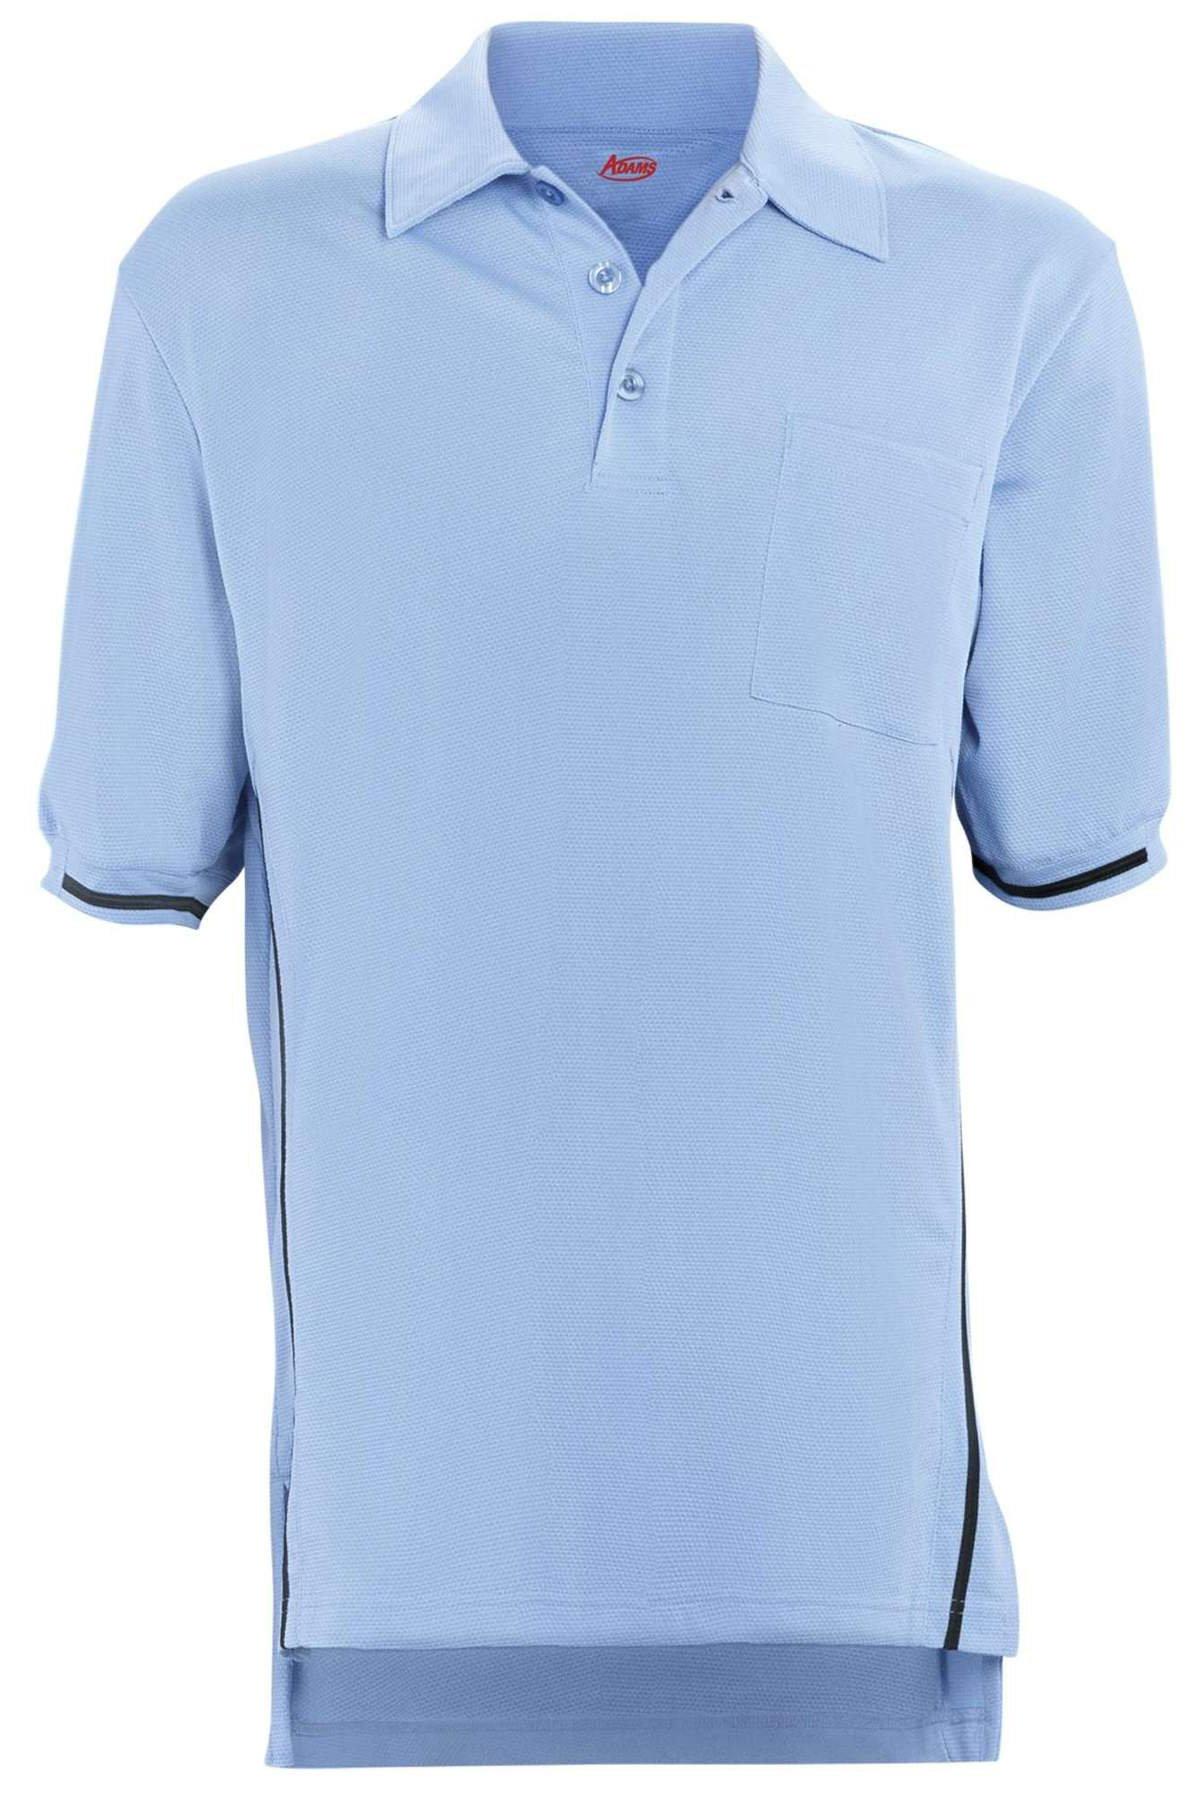 Sized for Chest Protector ADAMS USA Short Sleeve Baseball Umpire Shirt Navy